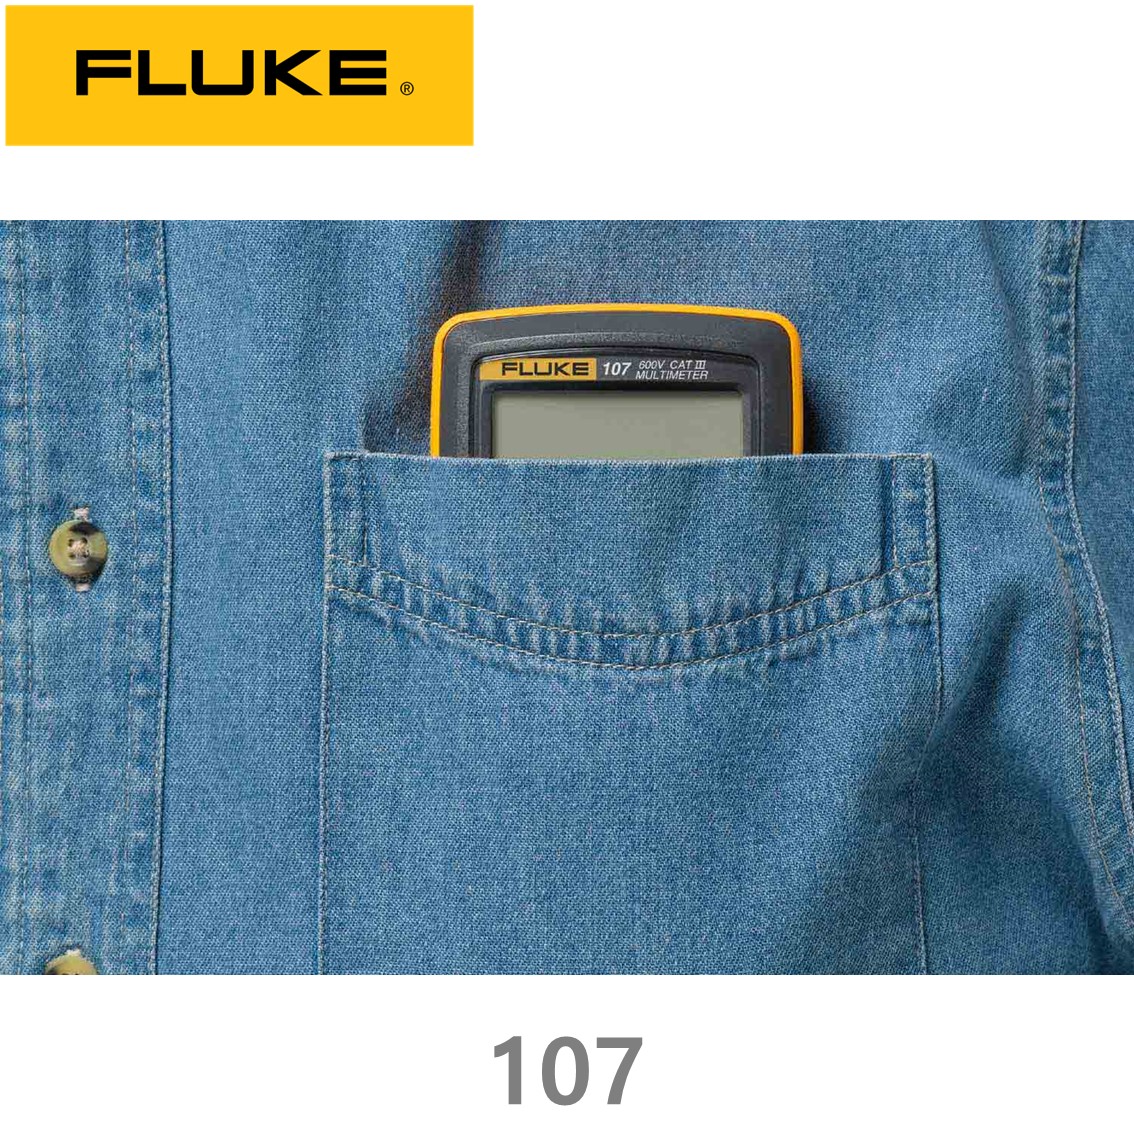 [ Fluke 107 ESP] 손바닥 포켓 테스터기, 디지털 멀티미터 플루크 107 ( 백라이트, 다이오드 측정 )